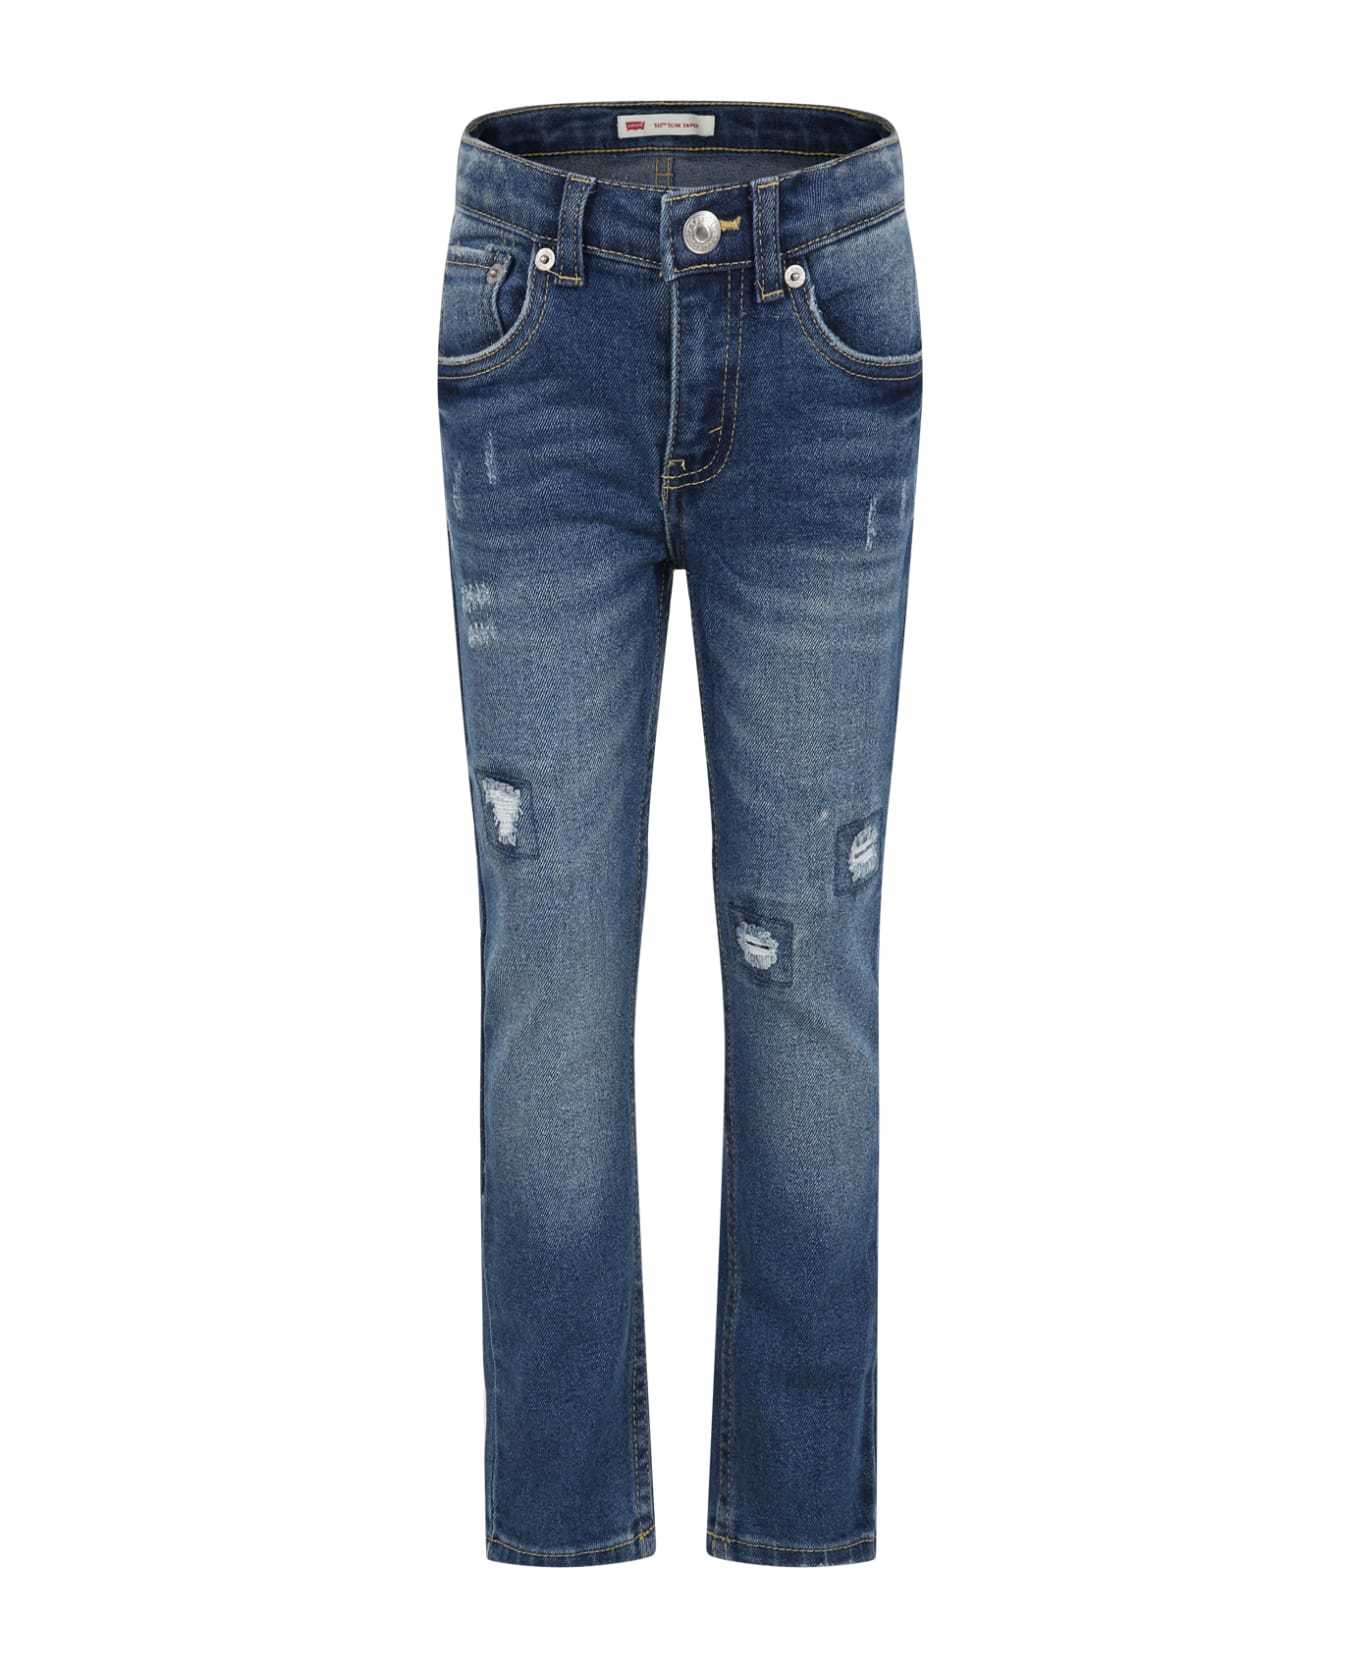 Levi's Blue Jeans For Boy With Logo - Denim